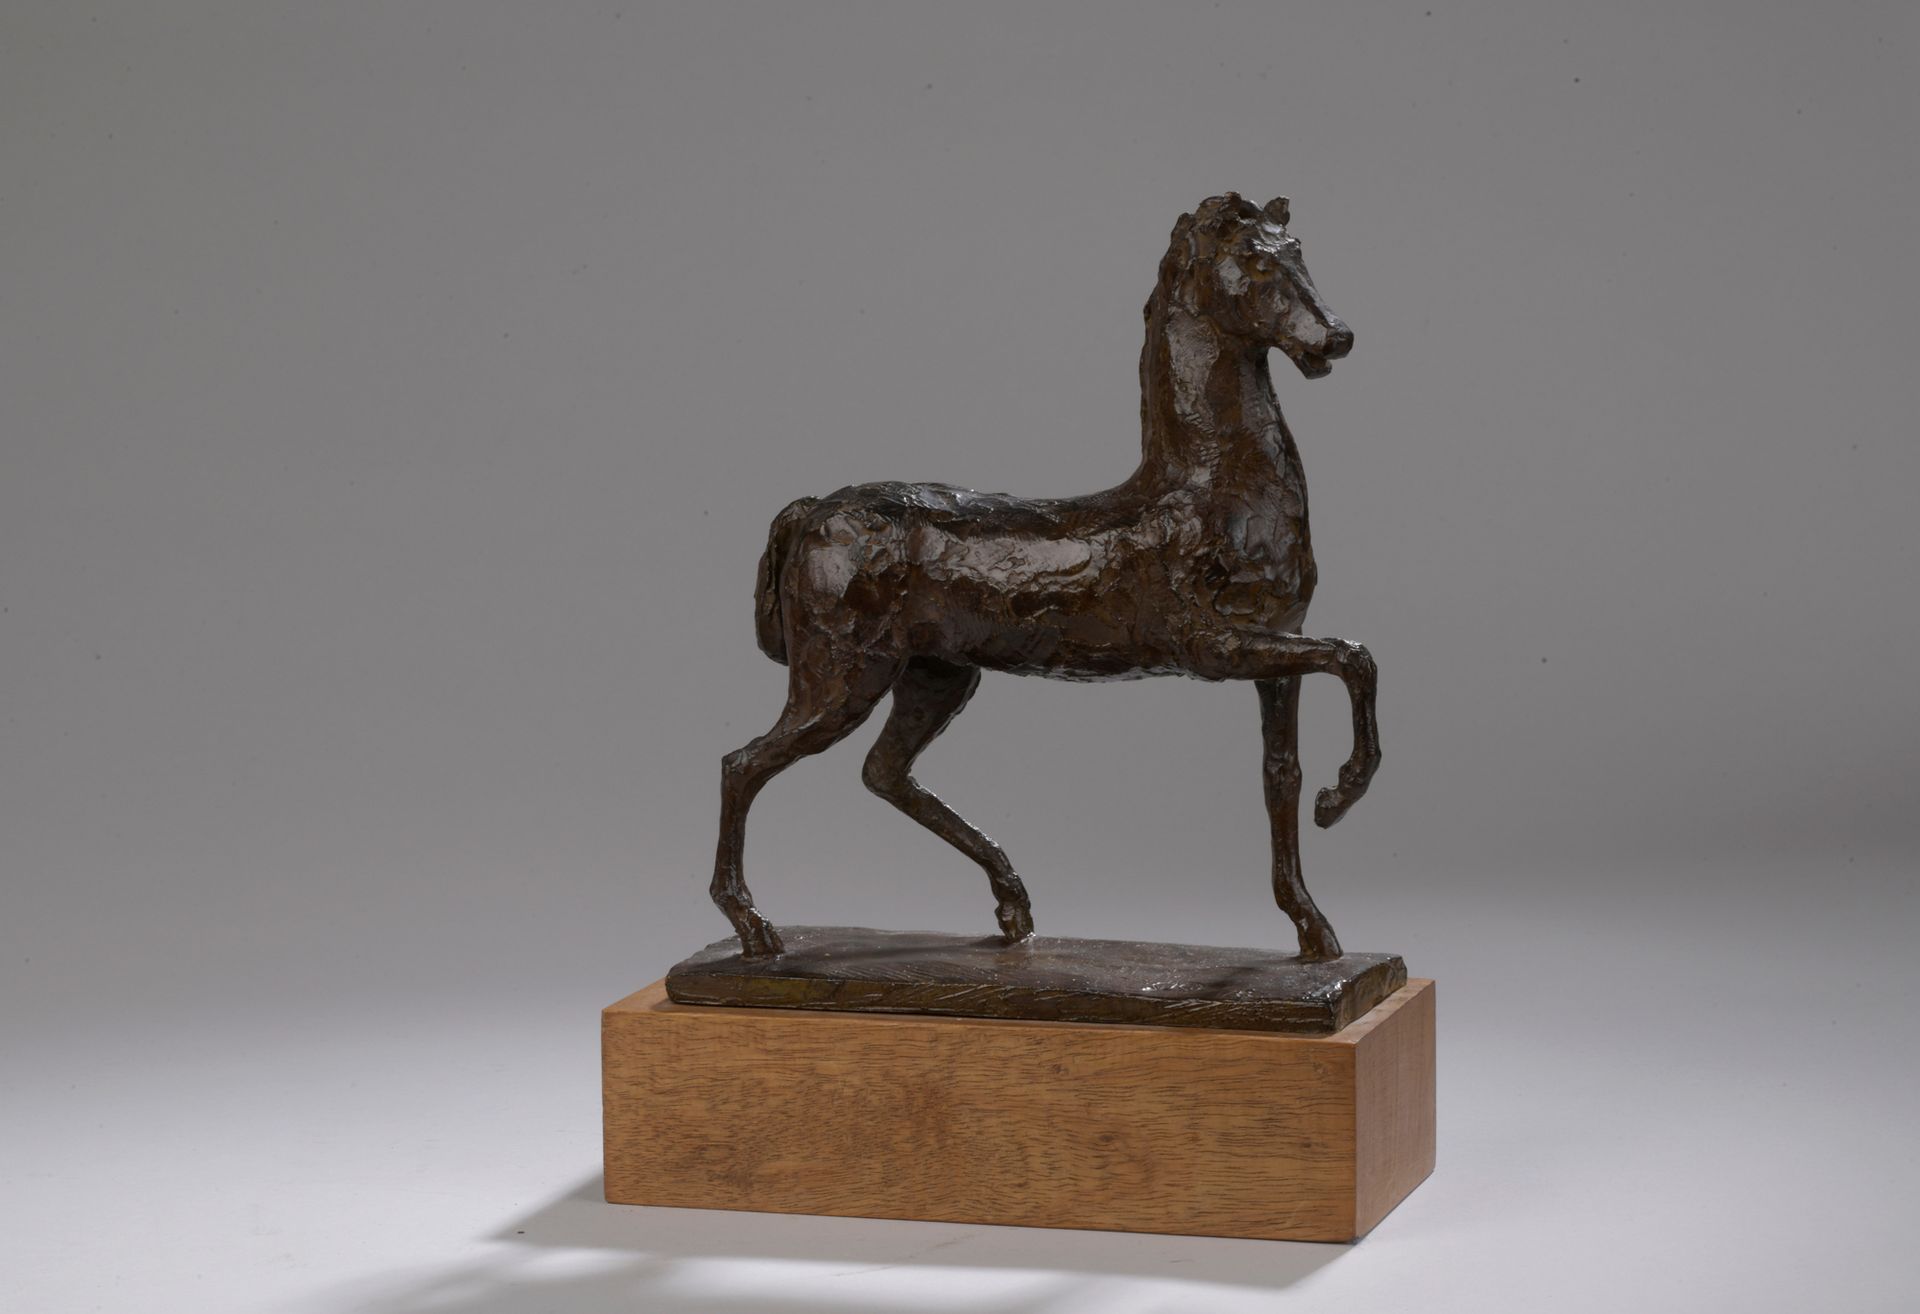 Null Jacques COQUILLAY (生于1935年)

马在行走中，右前腿抬起

青铜，带有红褐色的铜锈。

阳台上有JC的字样和1/8的数字。

&hellip;